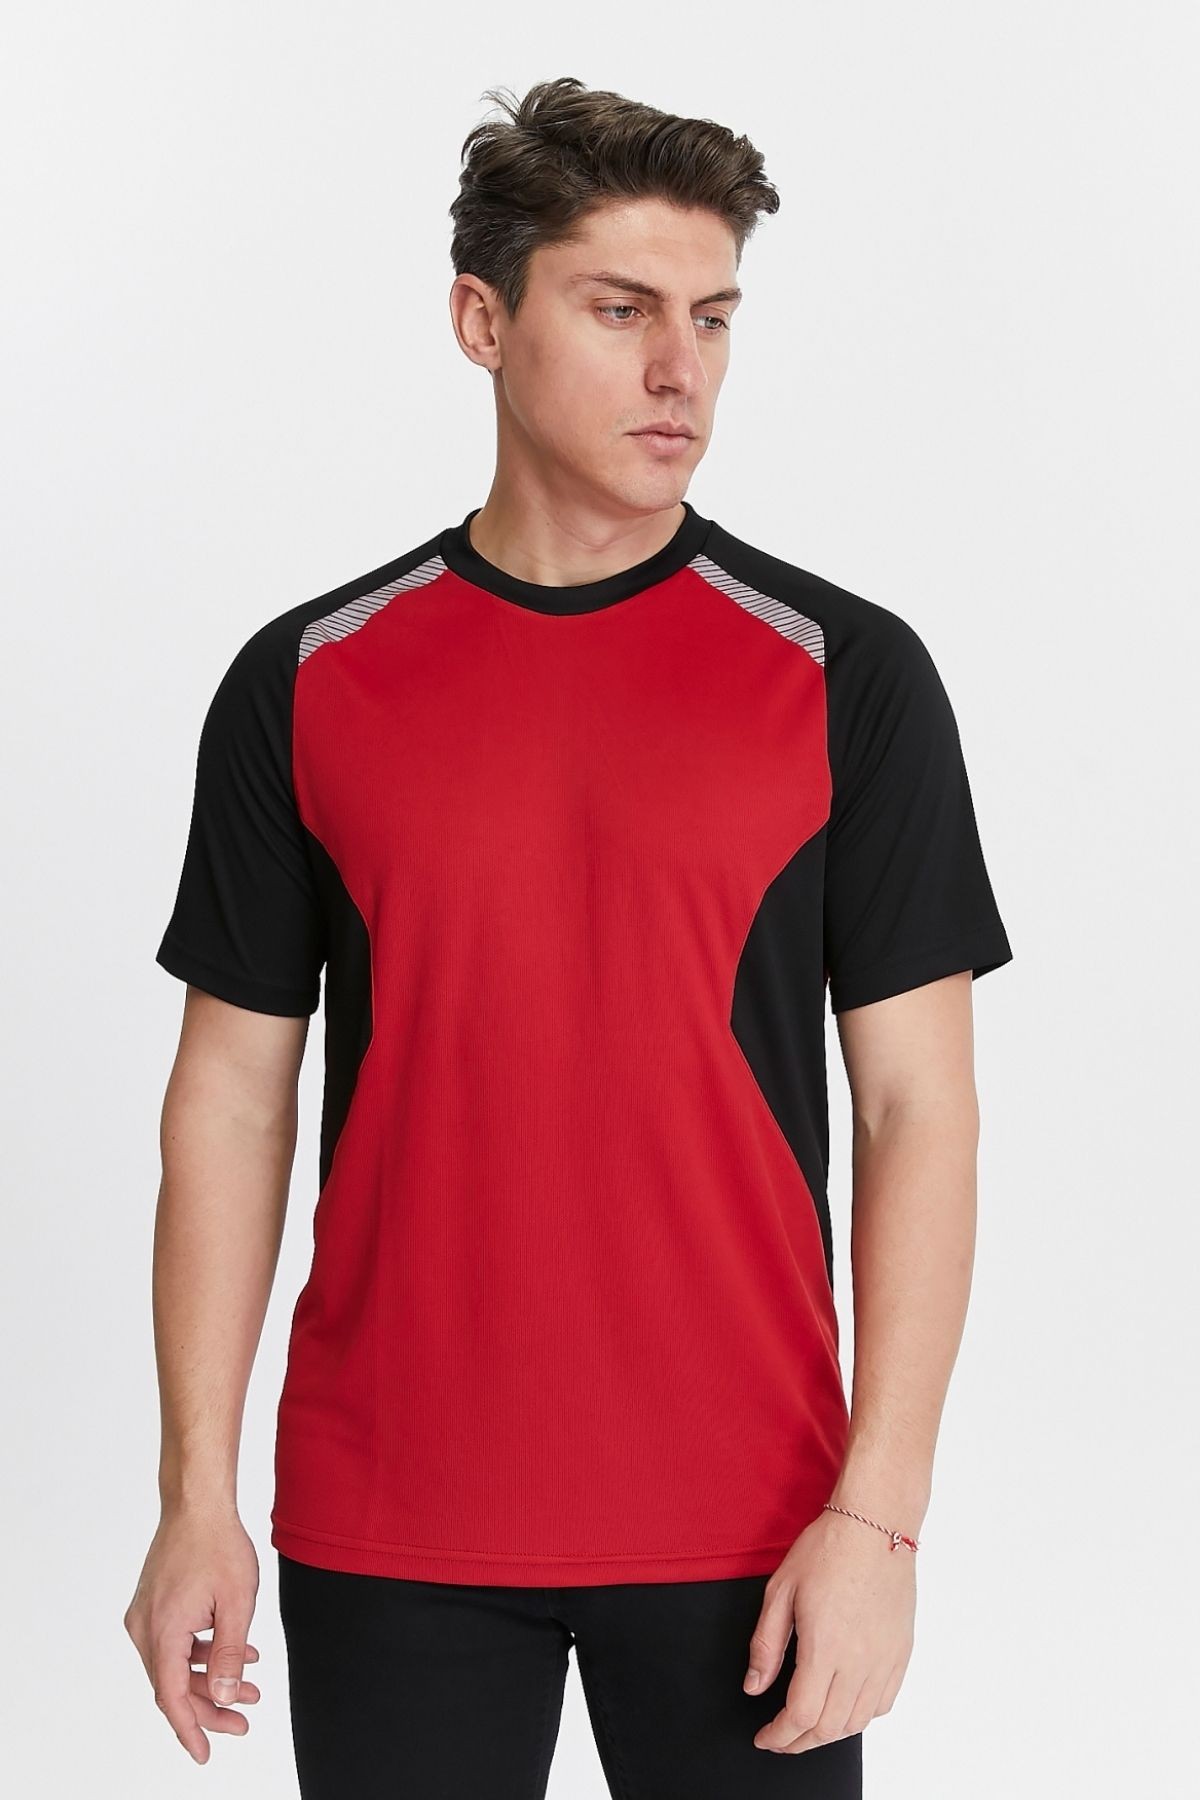 Uniprom Erkek Sıfır Yaka Tişört Nefes Alan Kumaş Procool Spor Outdoor T-shirt Kırmızı-Siyah